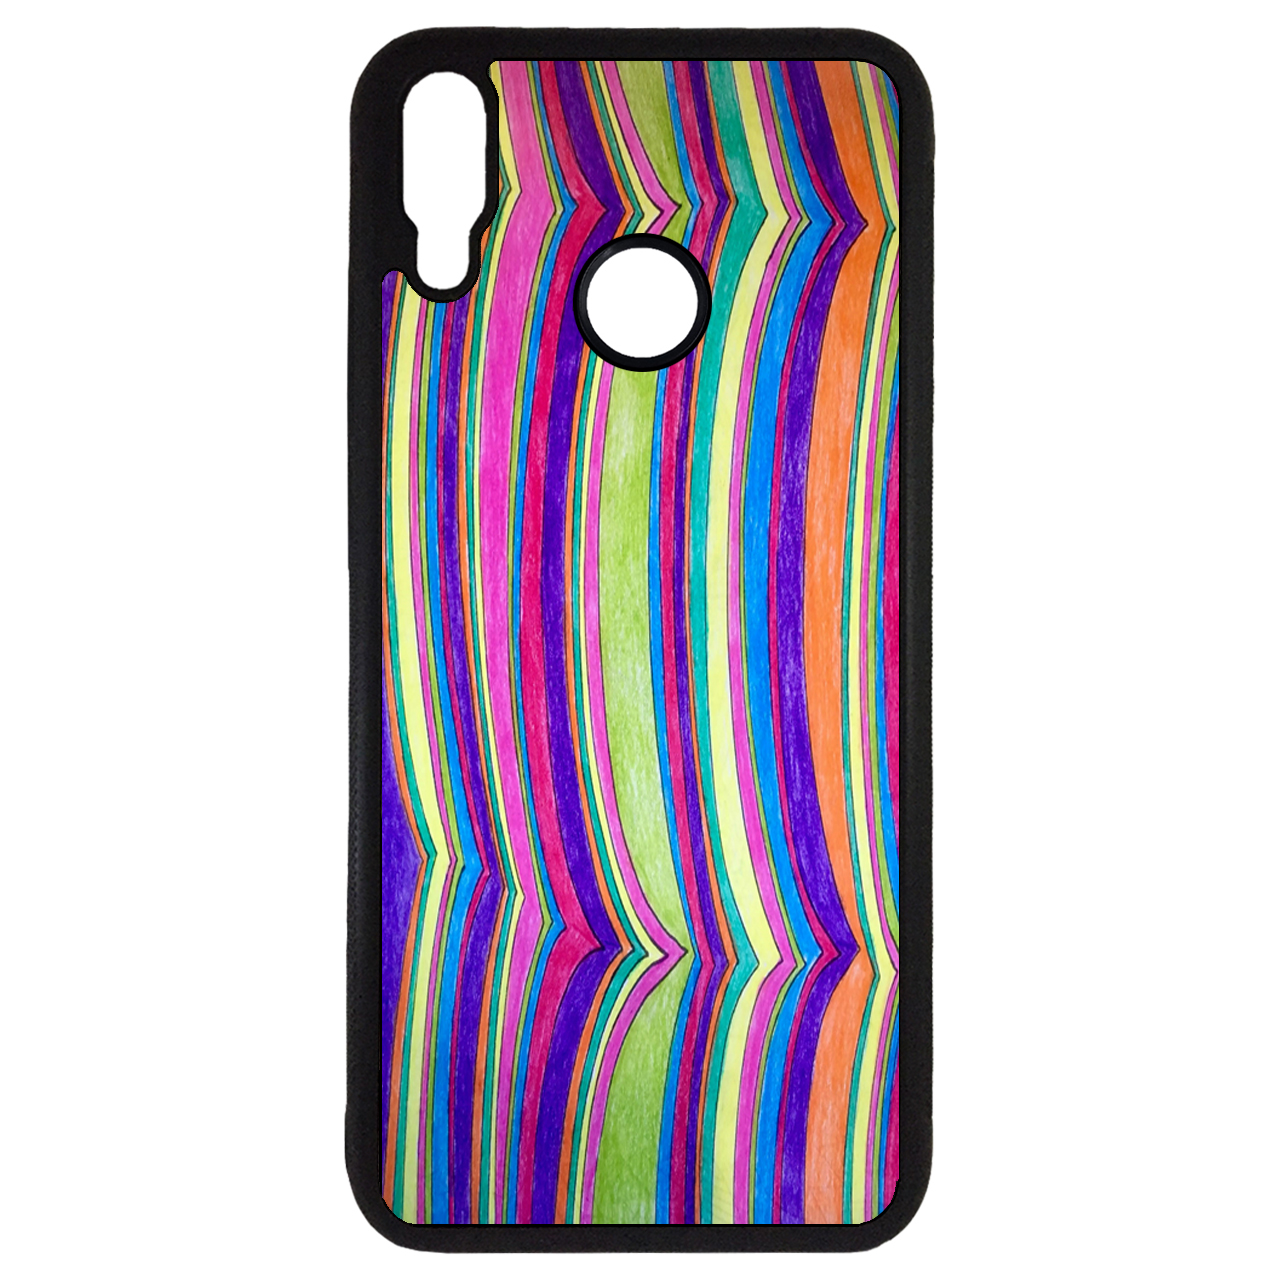 کاور طرح رنگارنگ کد 110646 مناسب برای گوشی موبایل سامسونگ galaxy a40